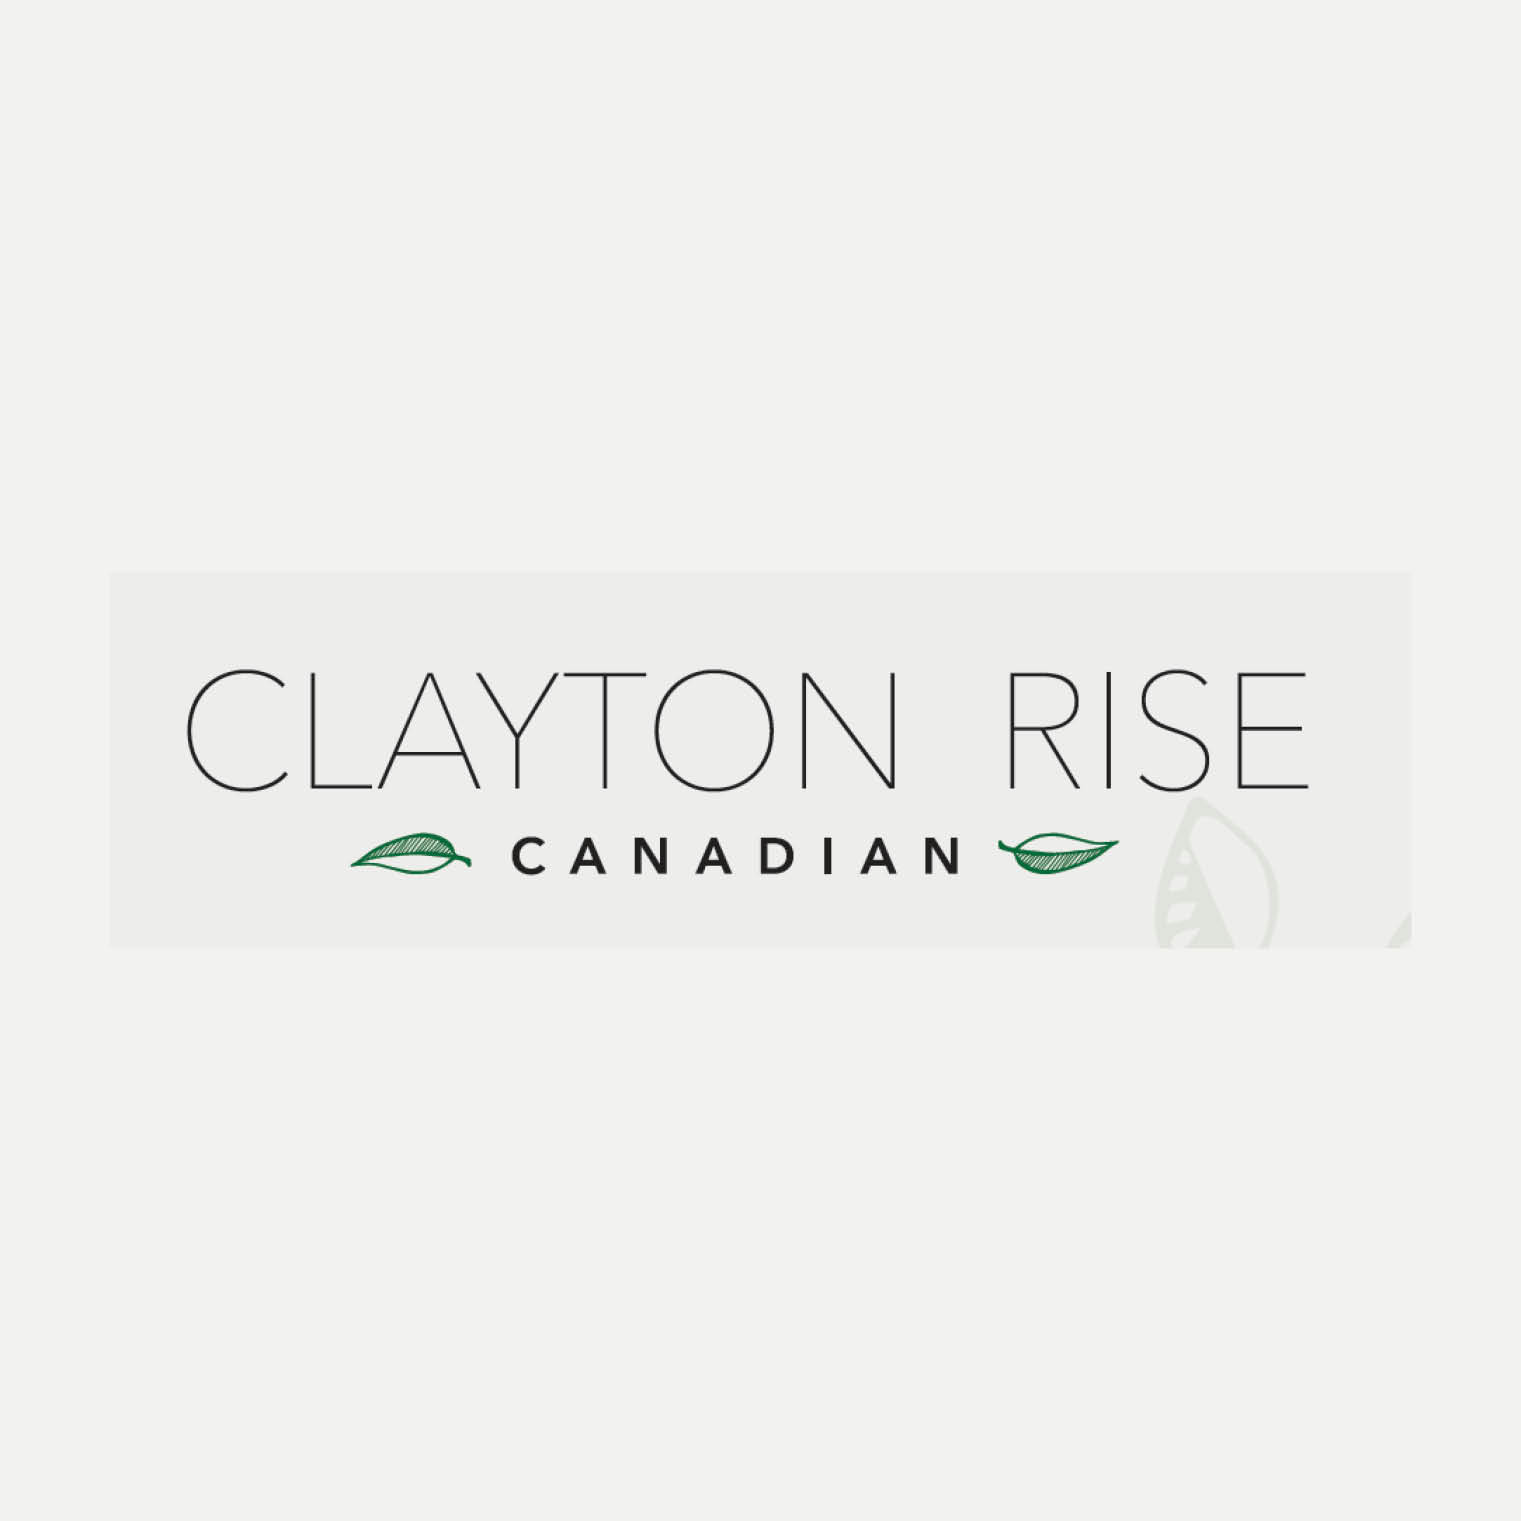 Clayton Rise, Canadian